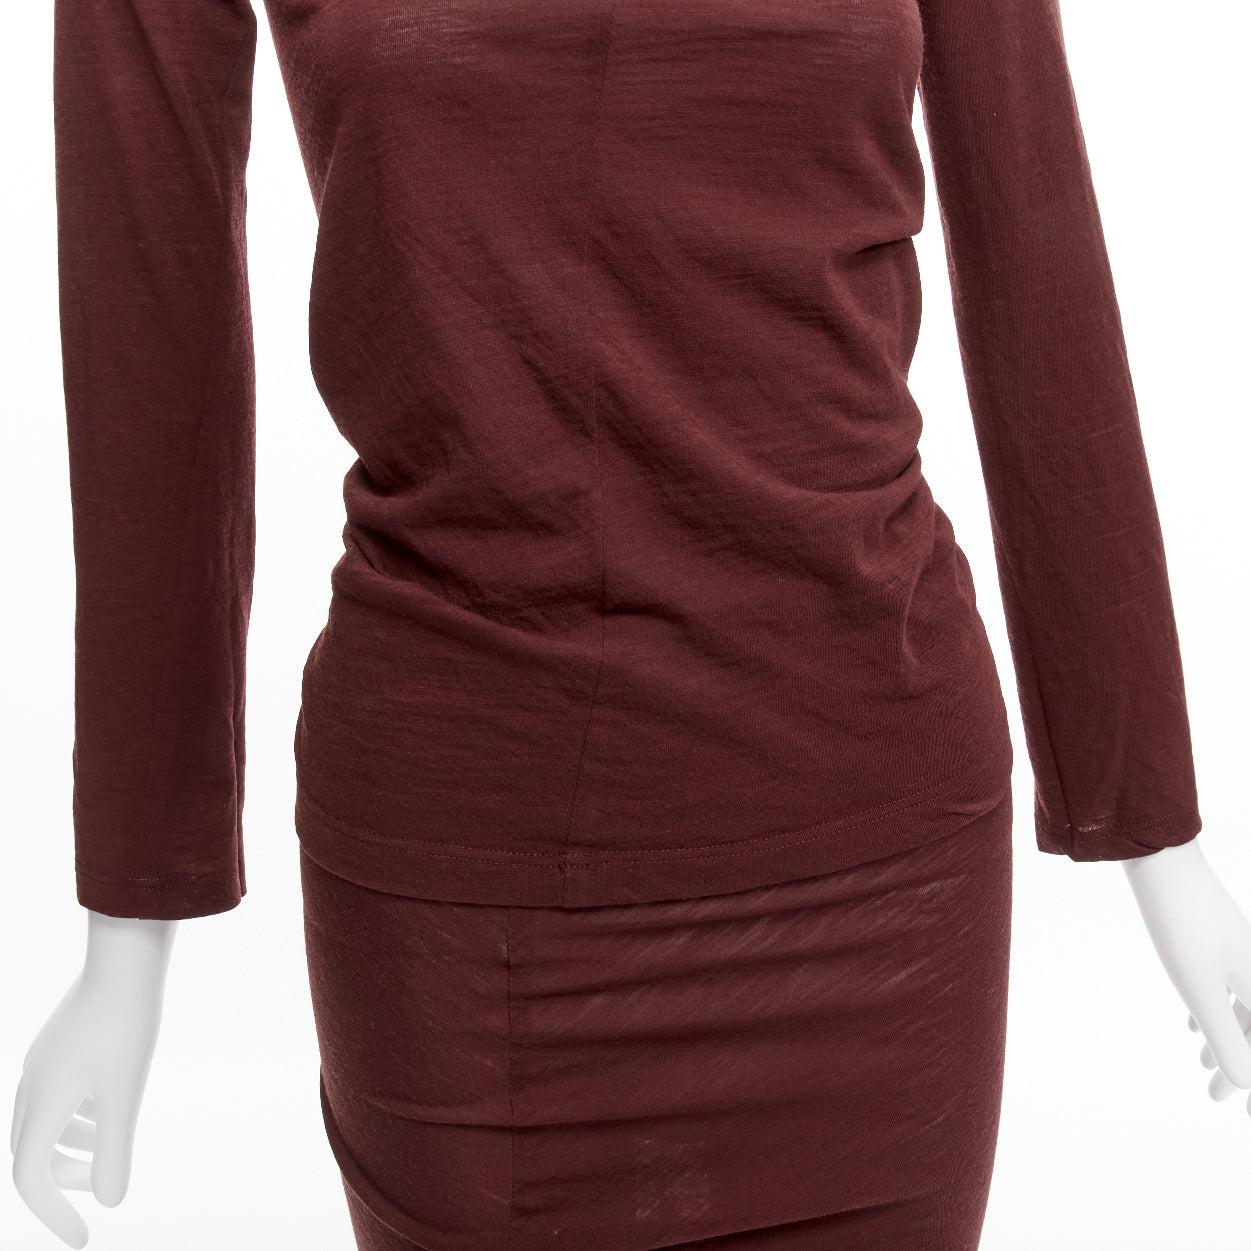 CDG COMME DES GARCONS burgundy brown bias cut stretch top midi skirt set S For Sale 3